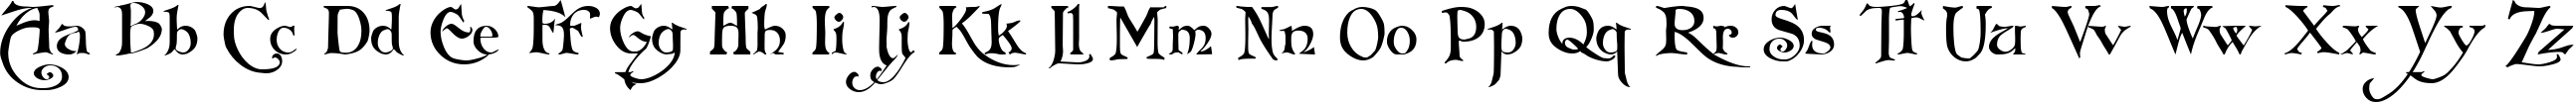 Пример написания английского алфавита шрифтом Arlekino